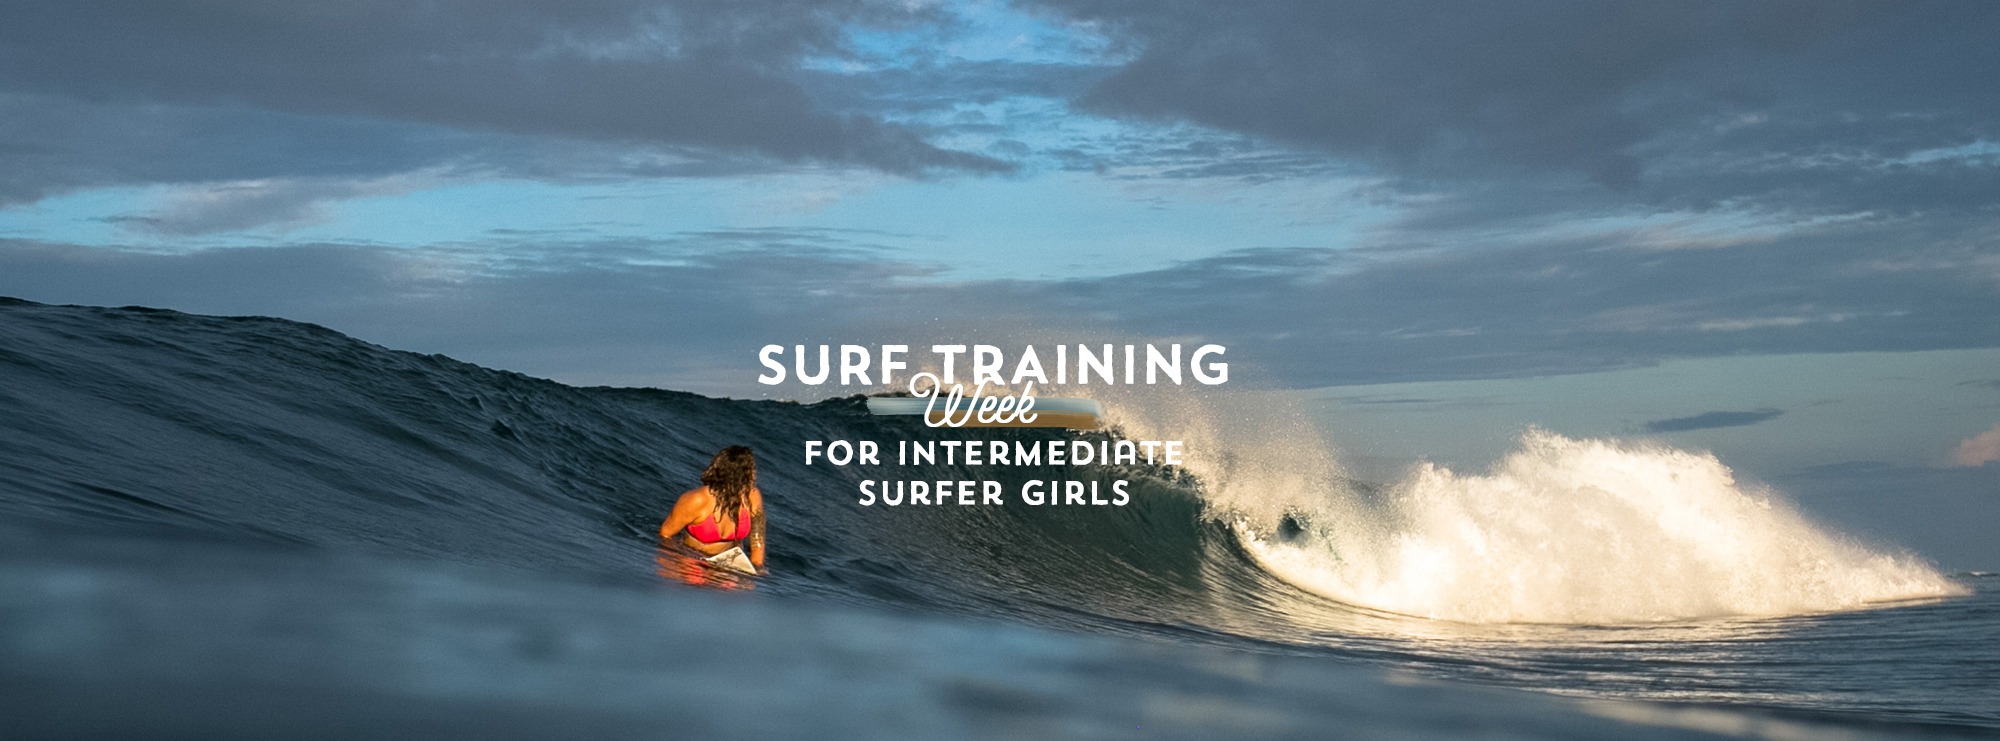 intermediate surf training girl